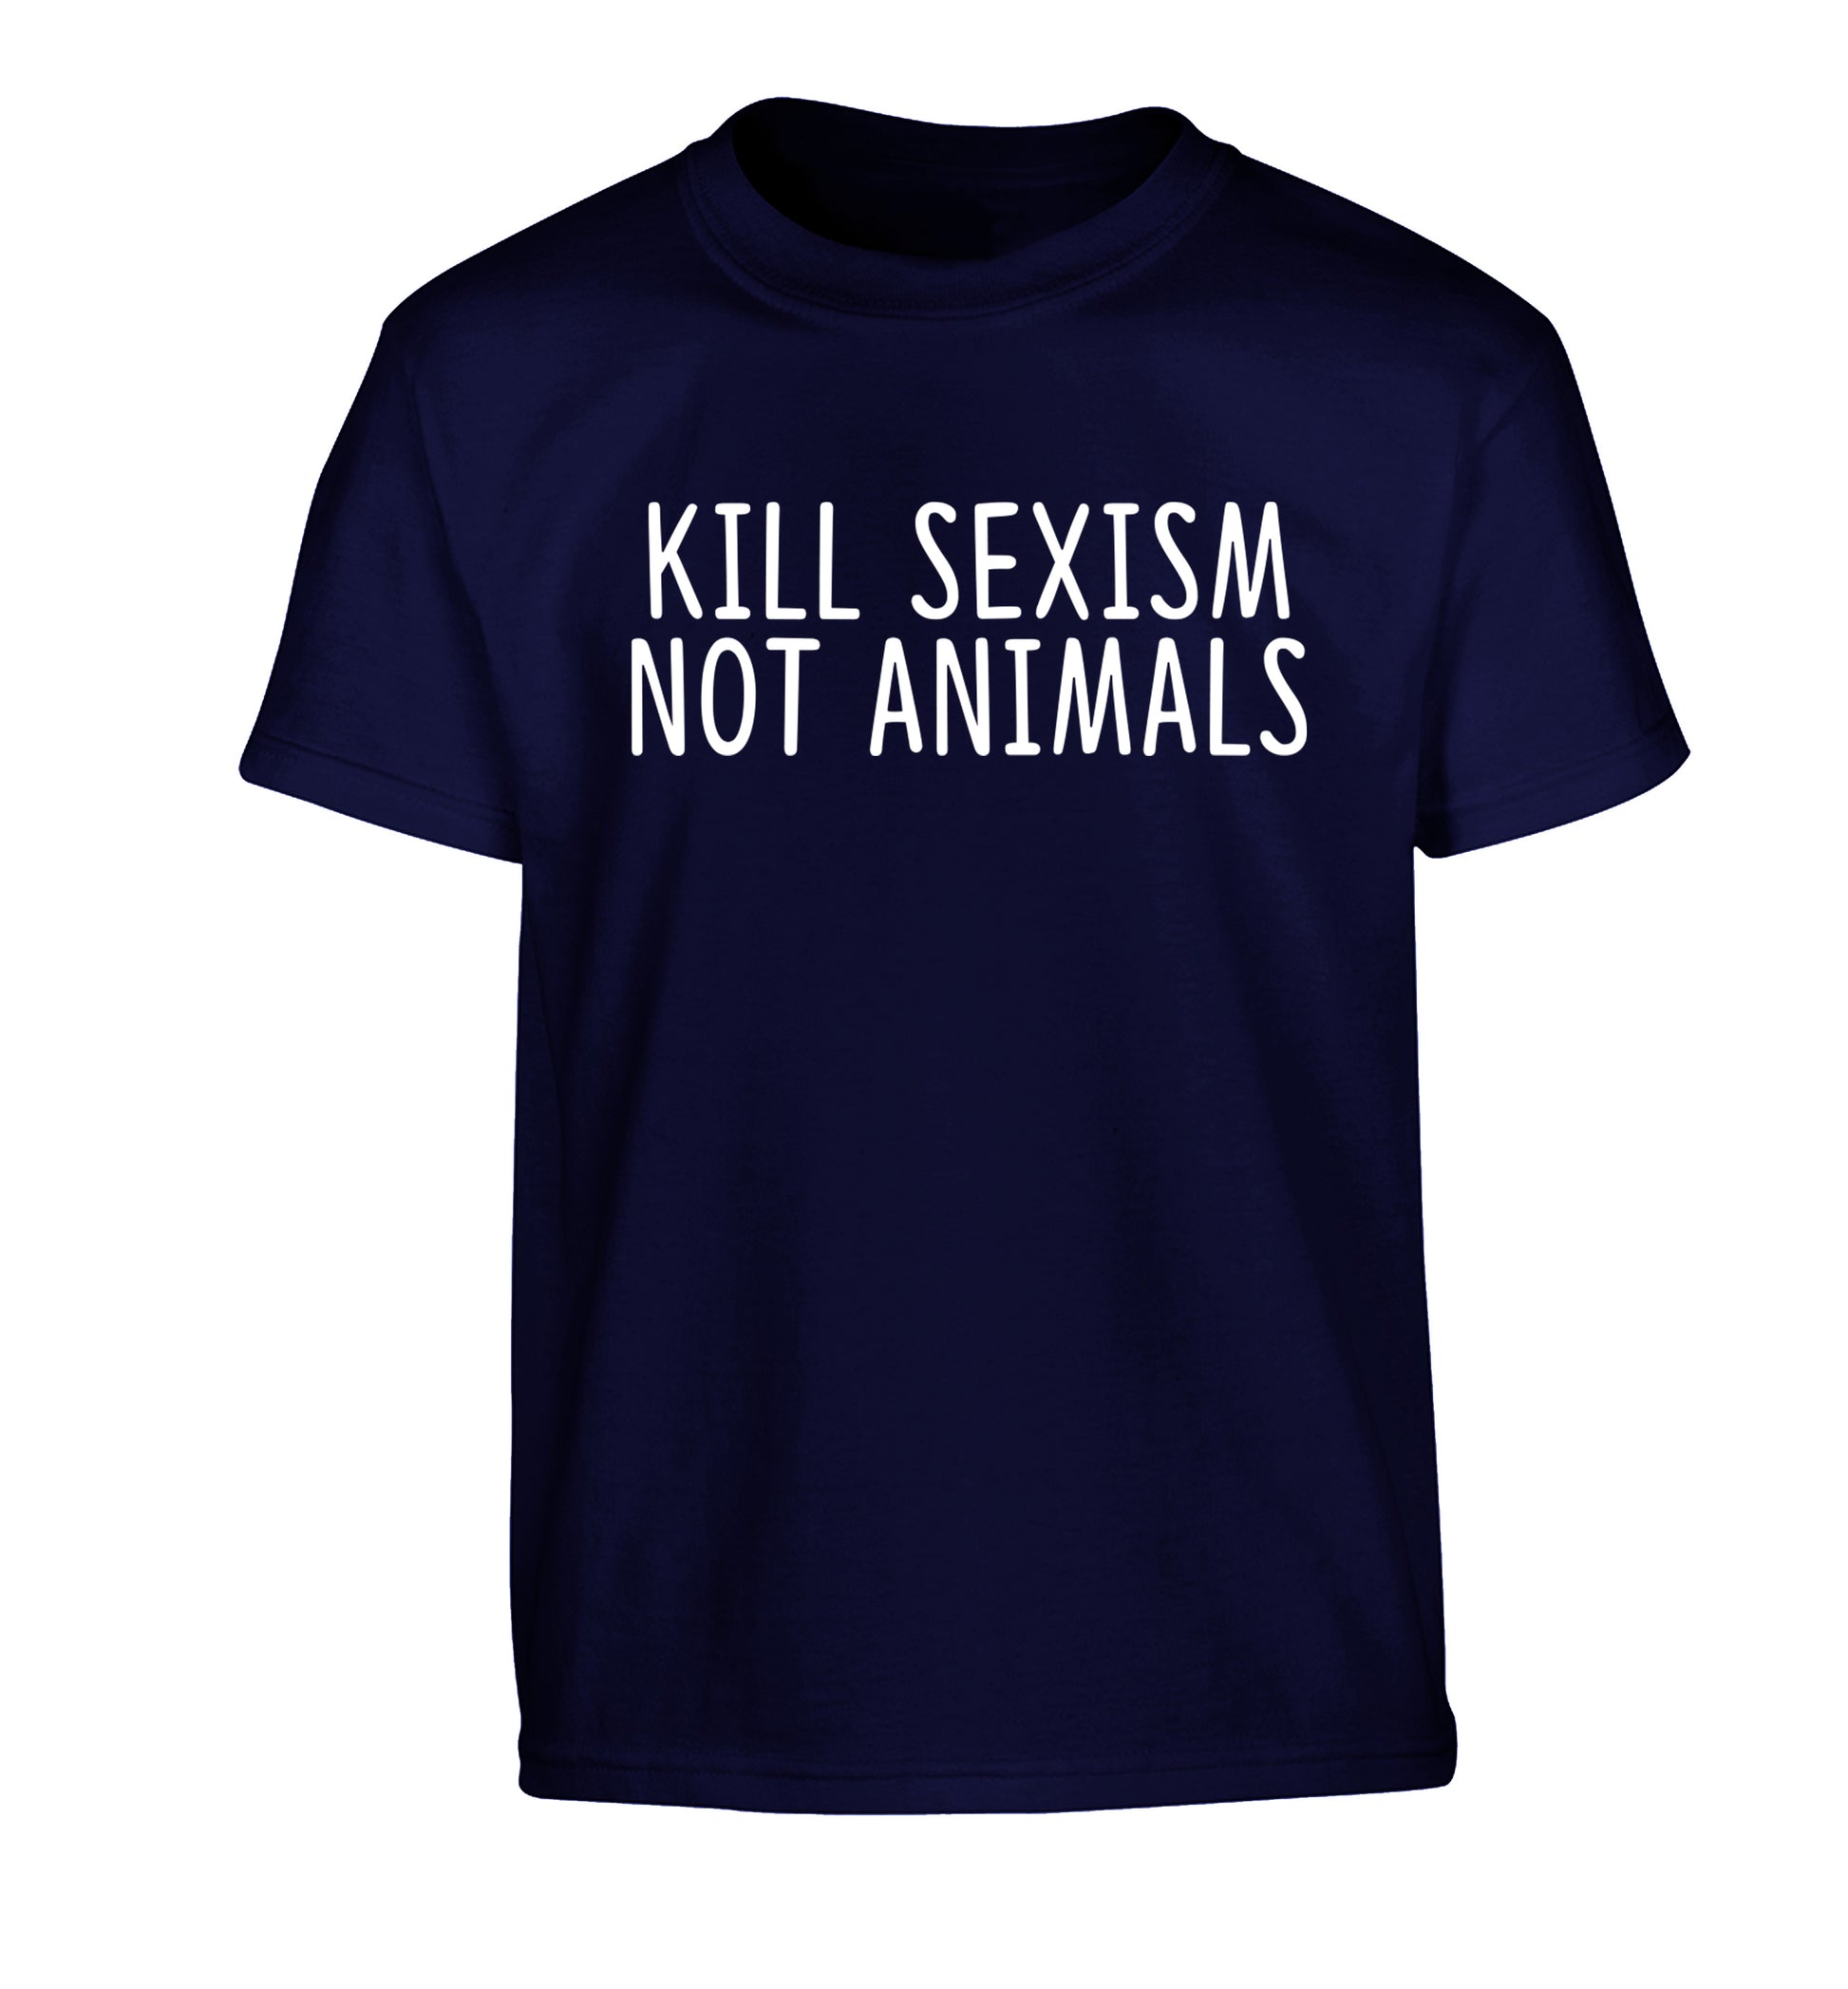 Kill Sexism Not Animals Children's navy Tshirt 12-13 Years